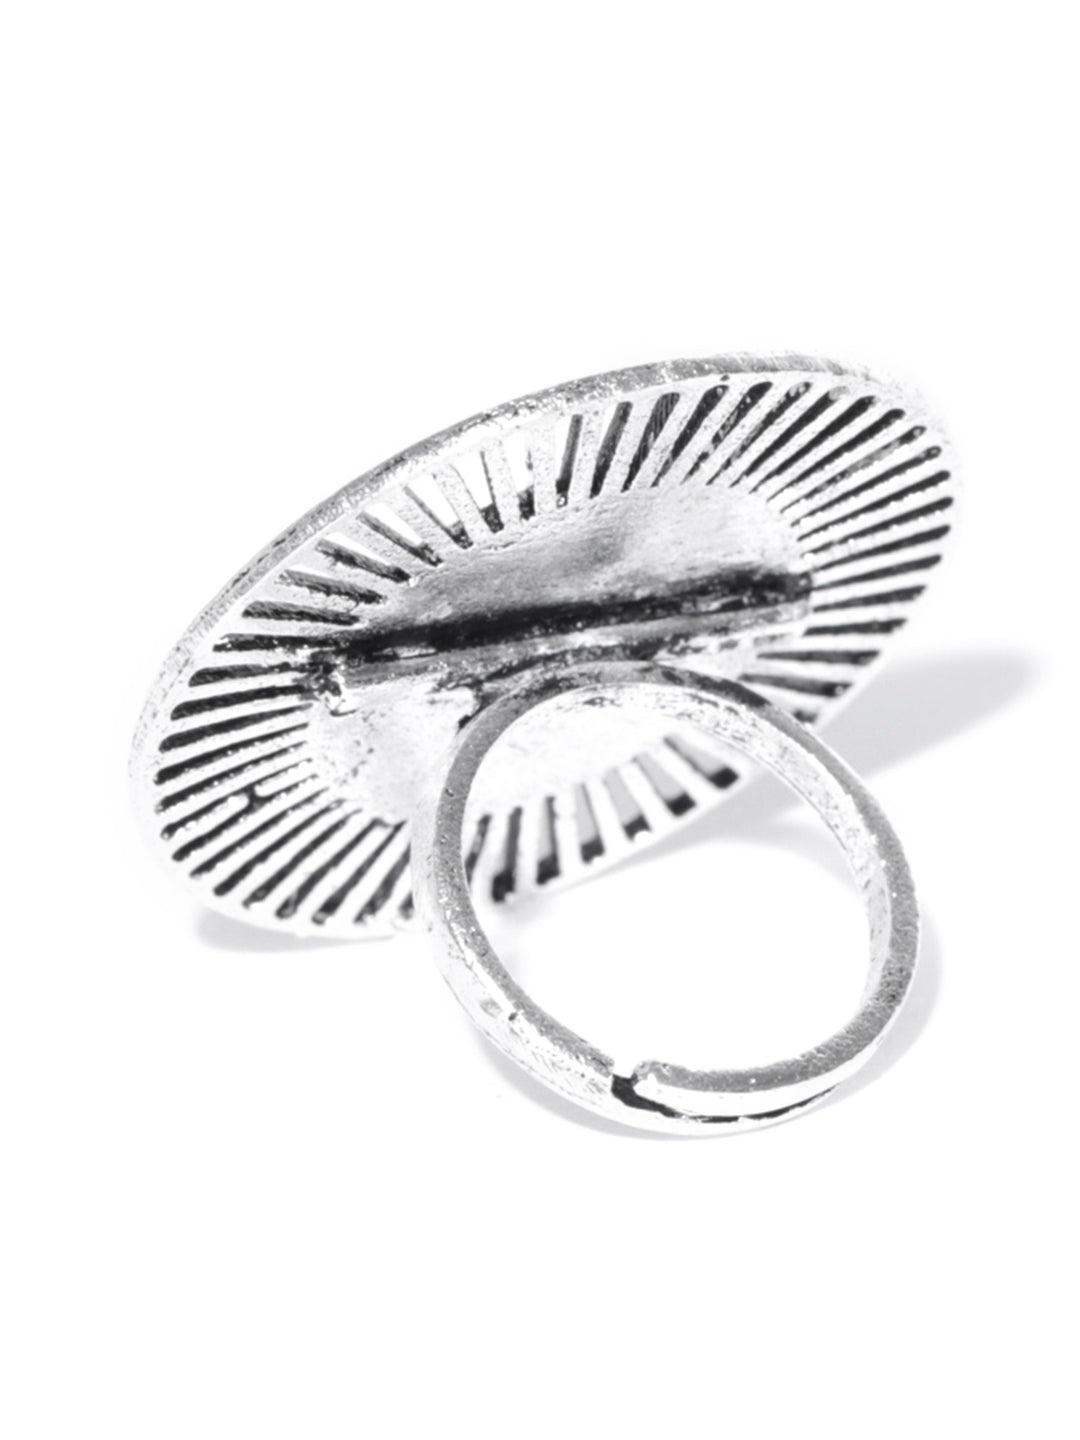 Oxidised Silver-Plated Textured Adjustable Ring